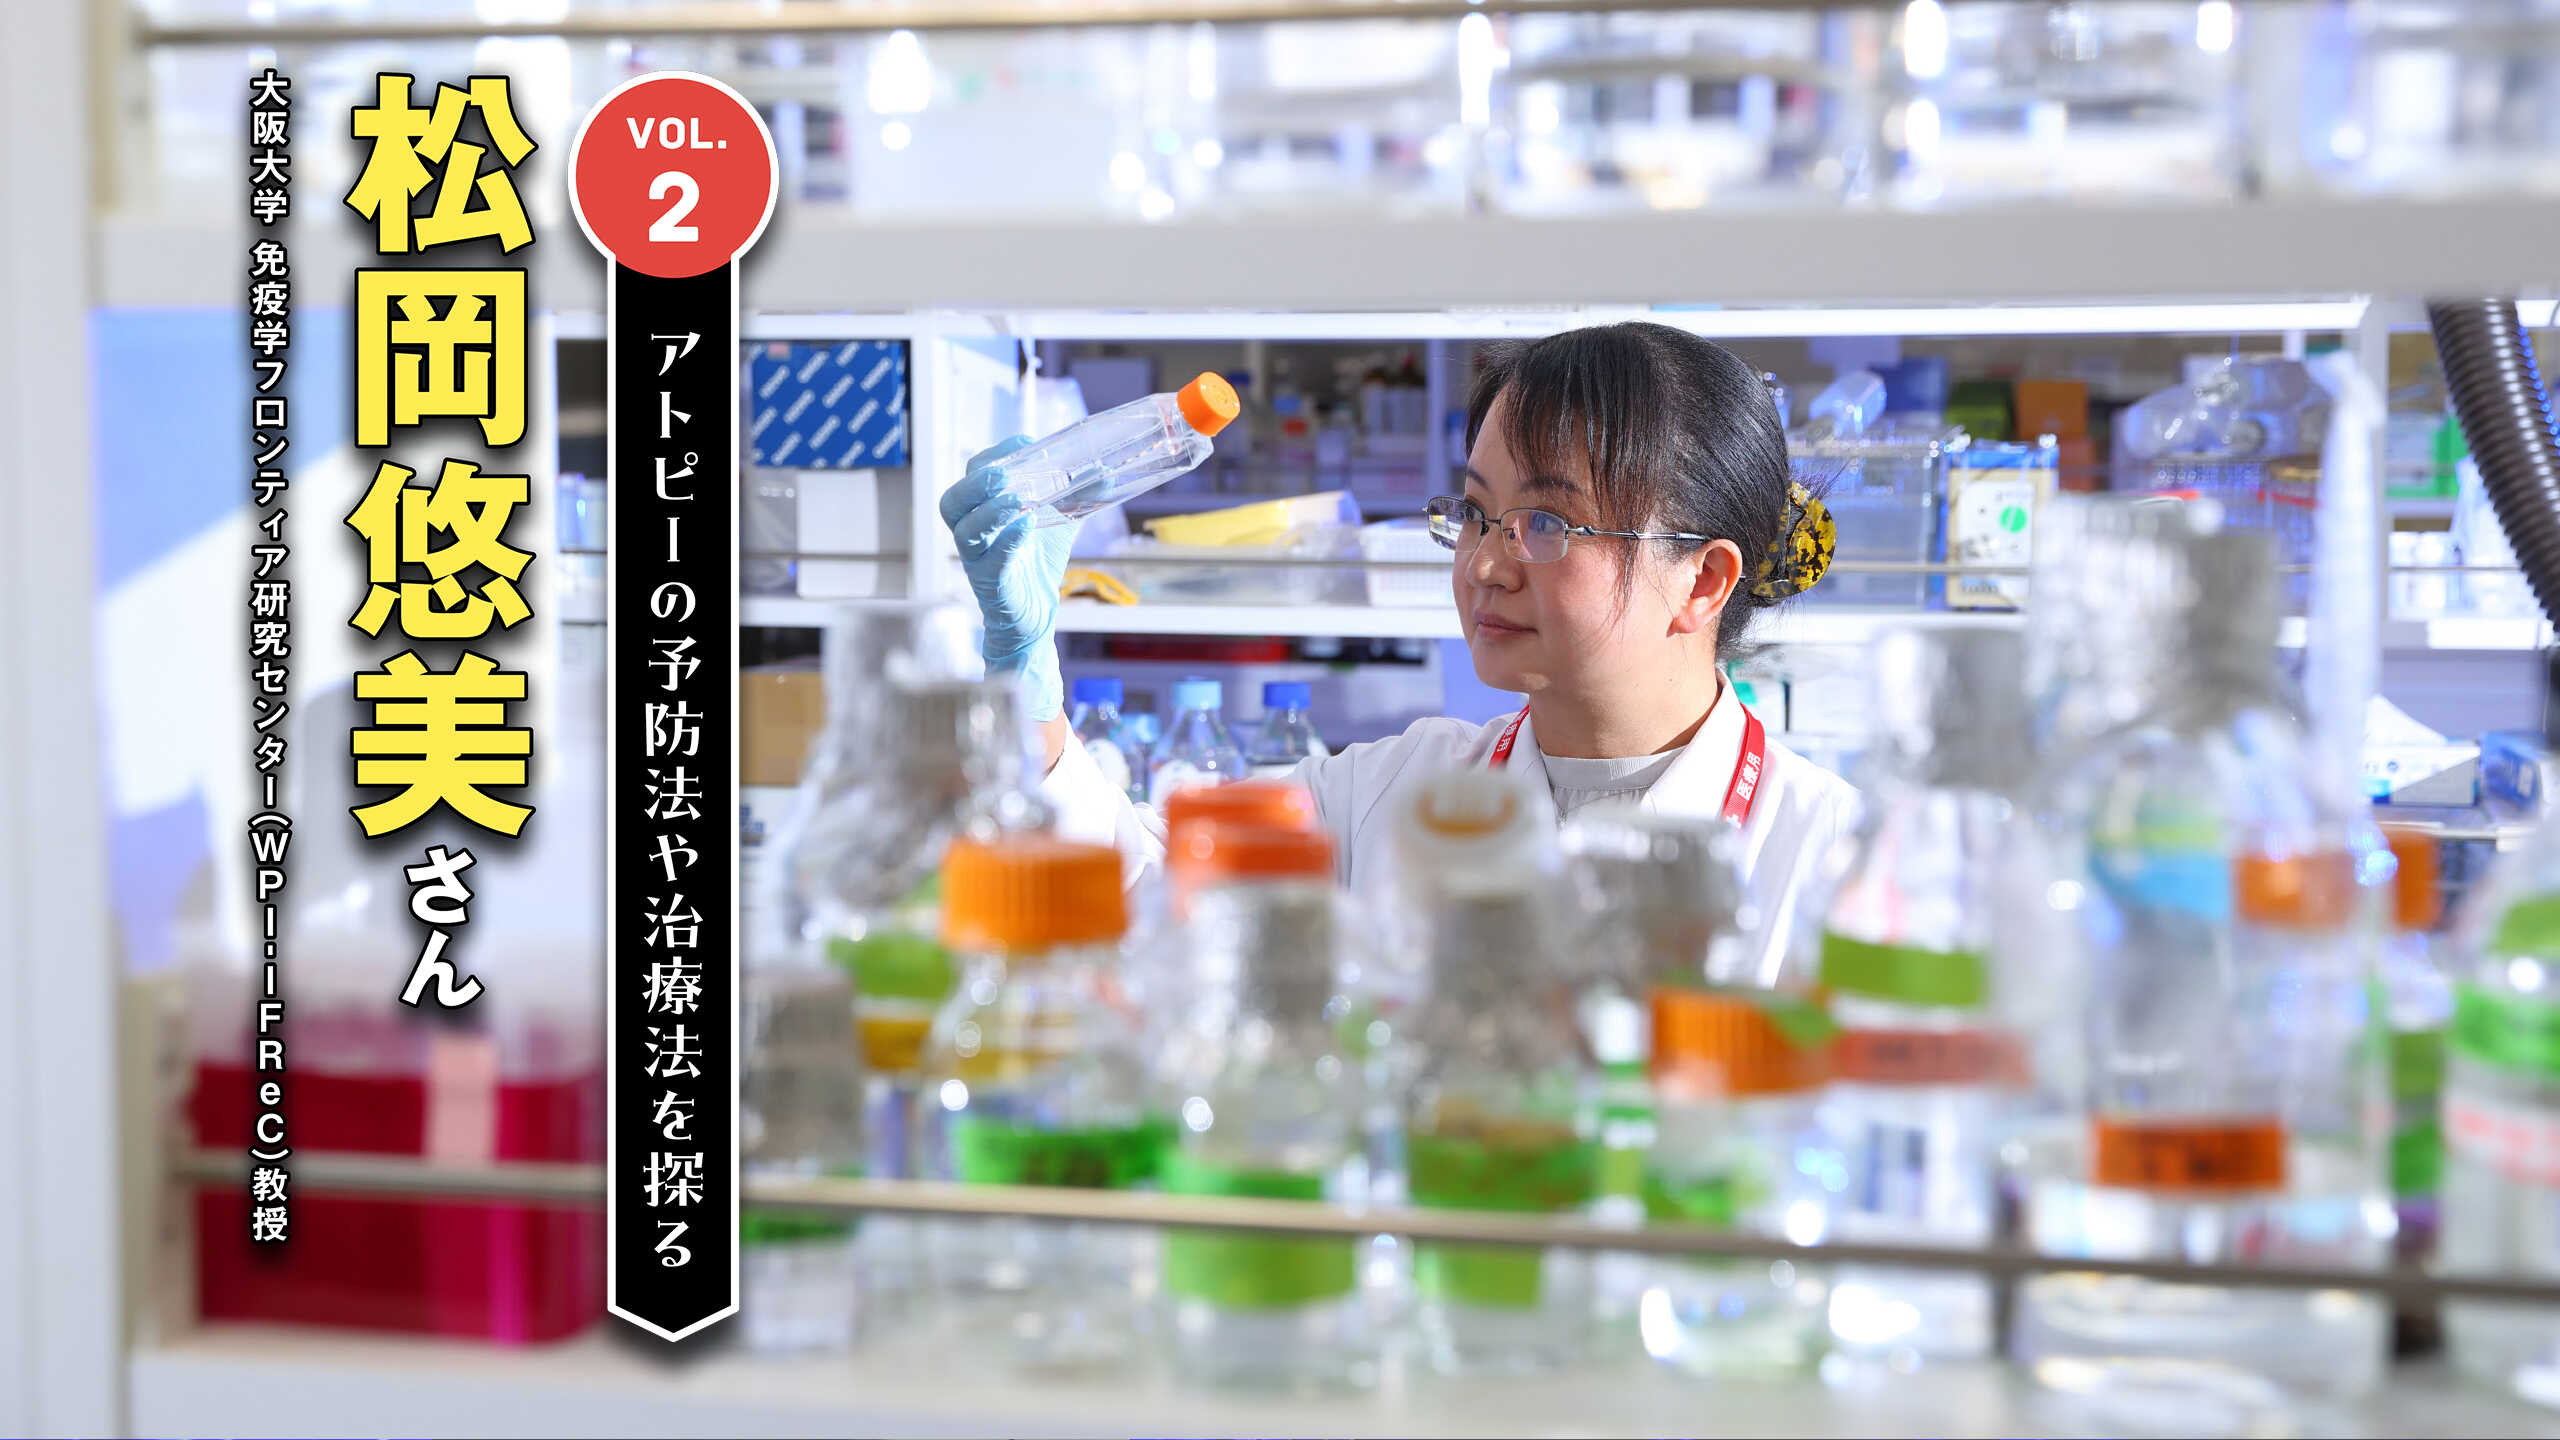 VOL.2 アトピーの予防法や治療法を探る 松岡悠美さん 大阪大学 免疫学フロンティア研究センター（WPI-IFReC）教授